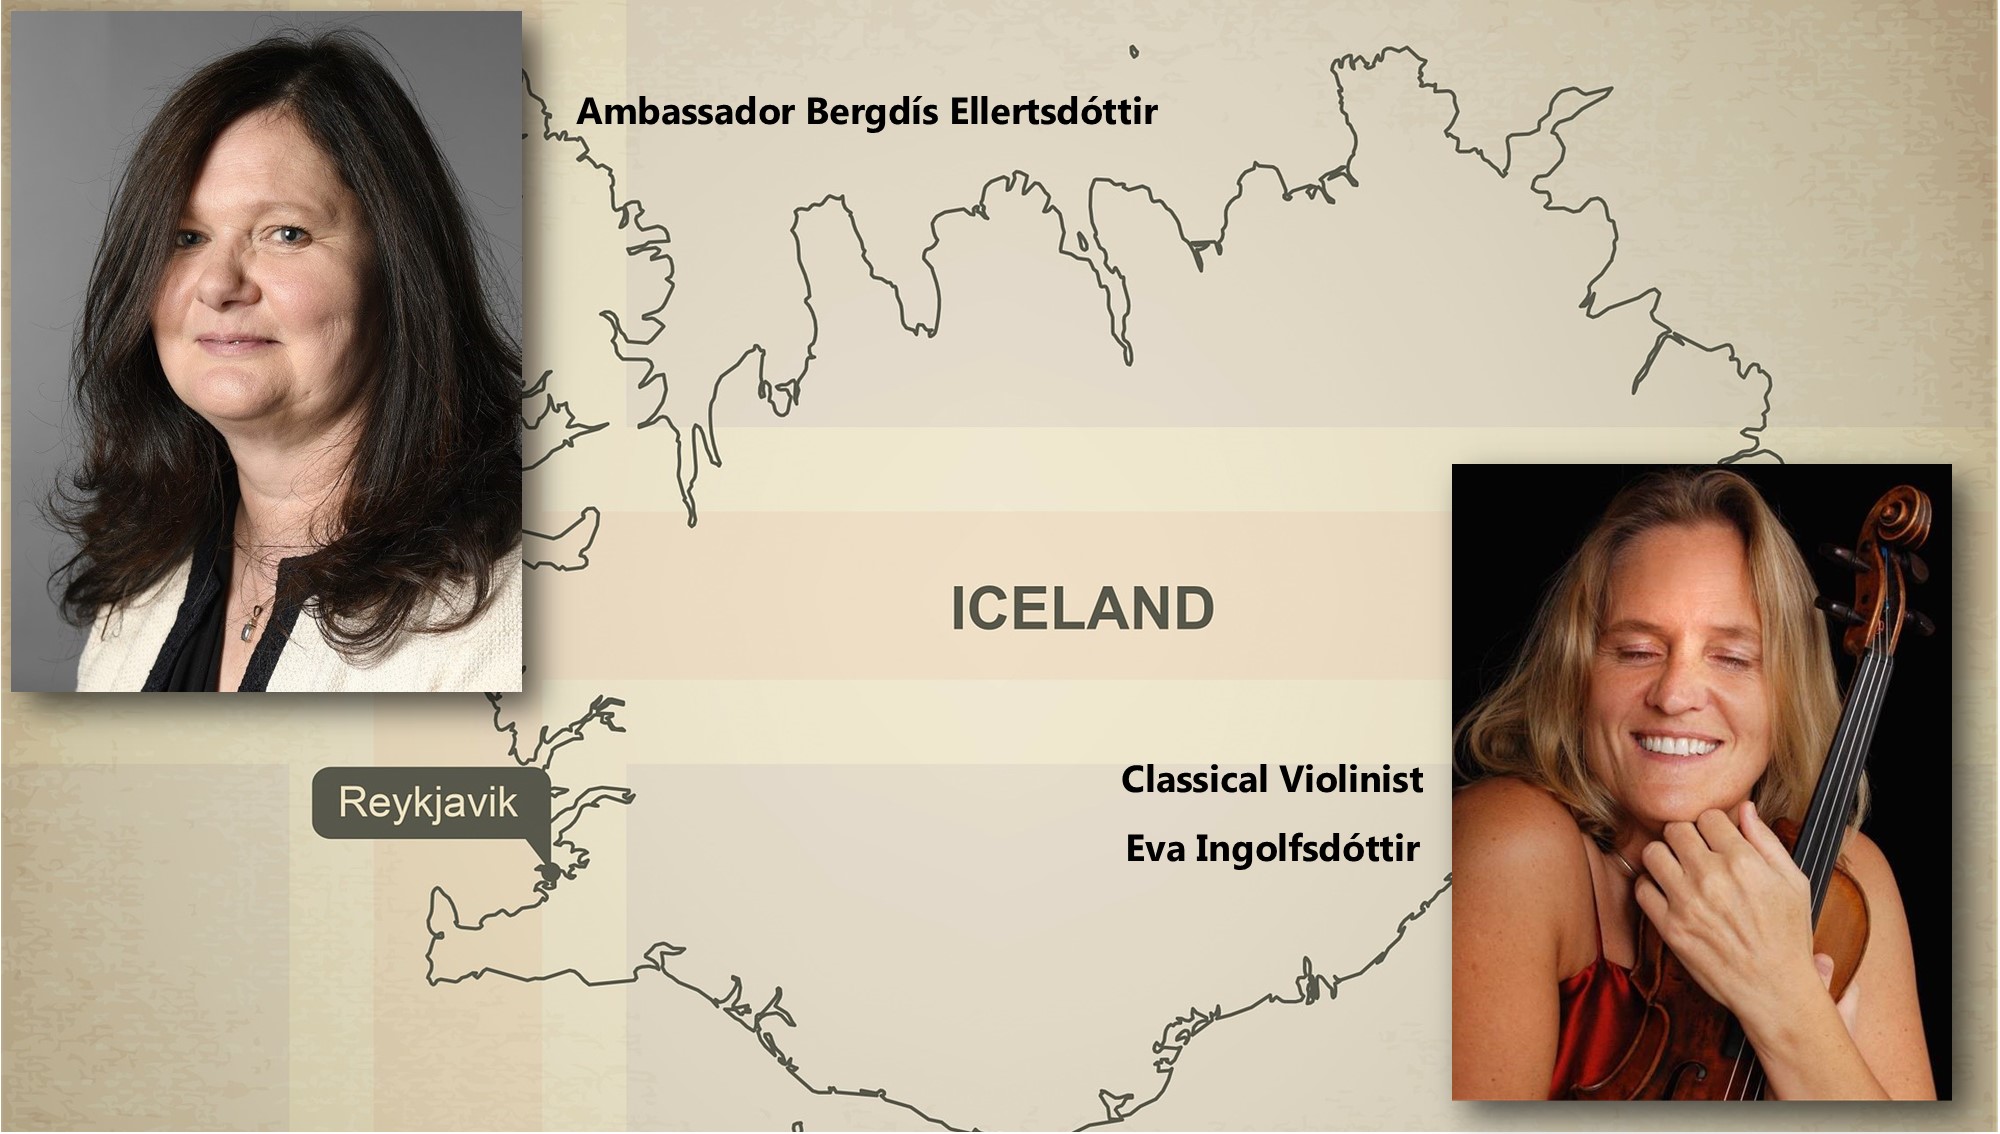 Icelandic Ambassador and Violinist Visit, March 29 Impact Banner